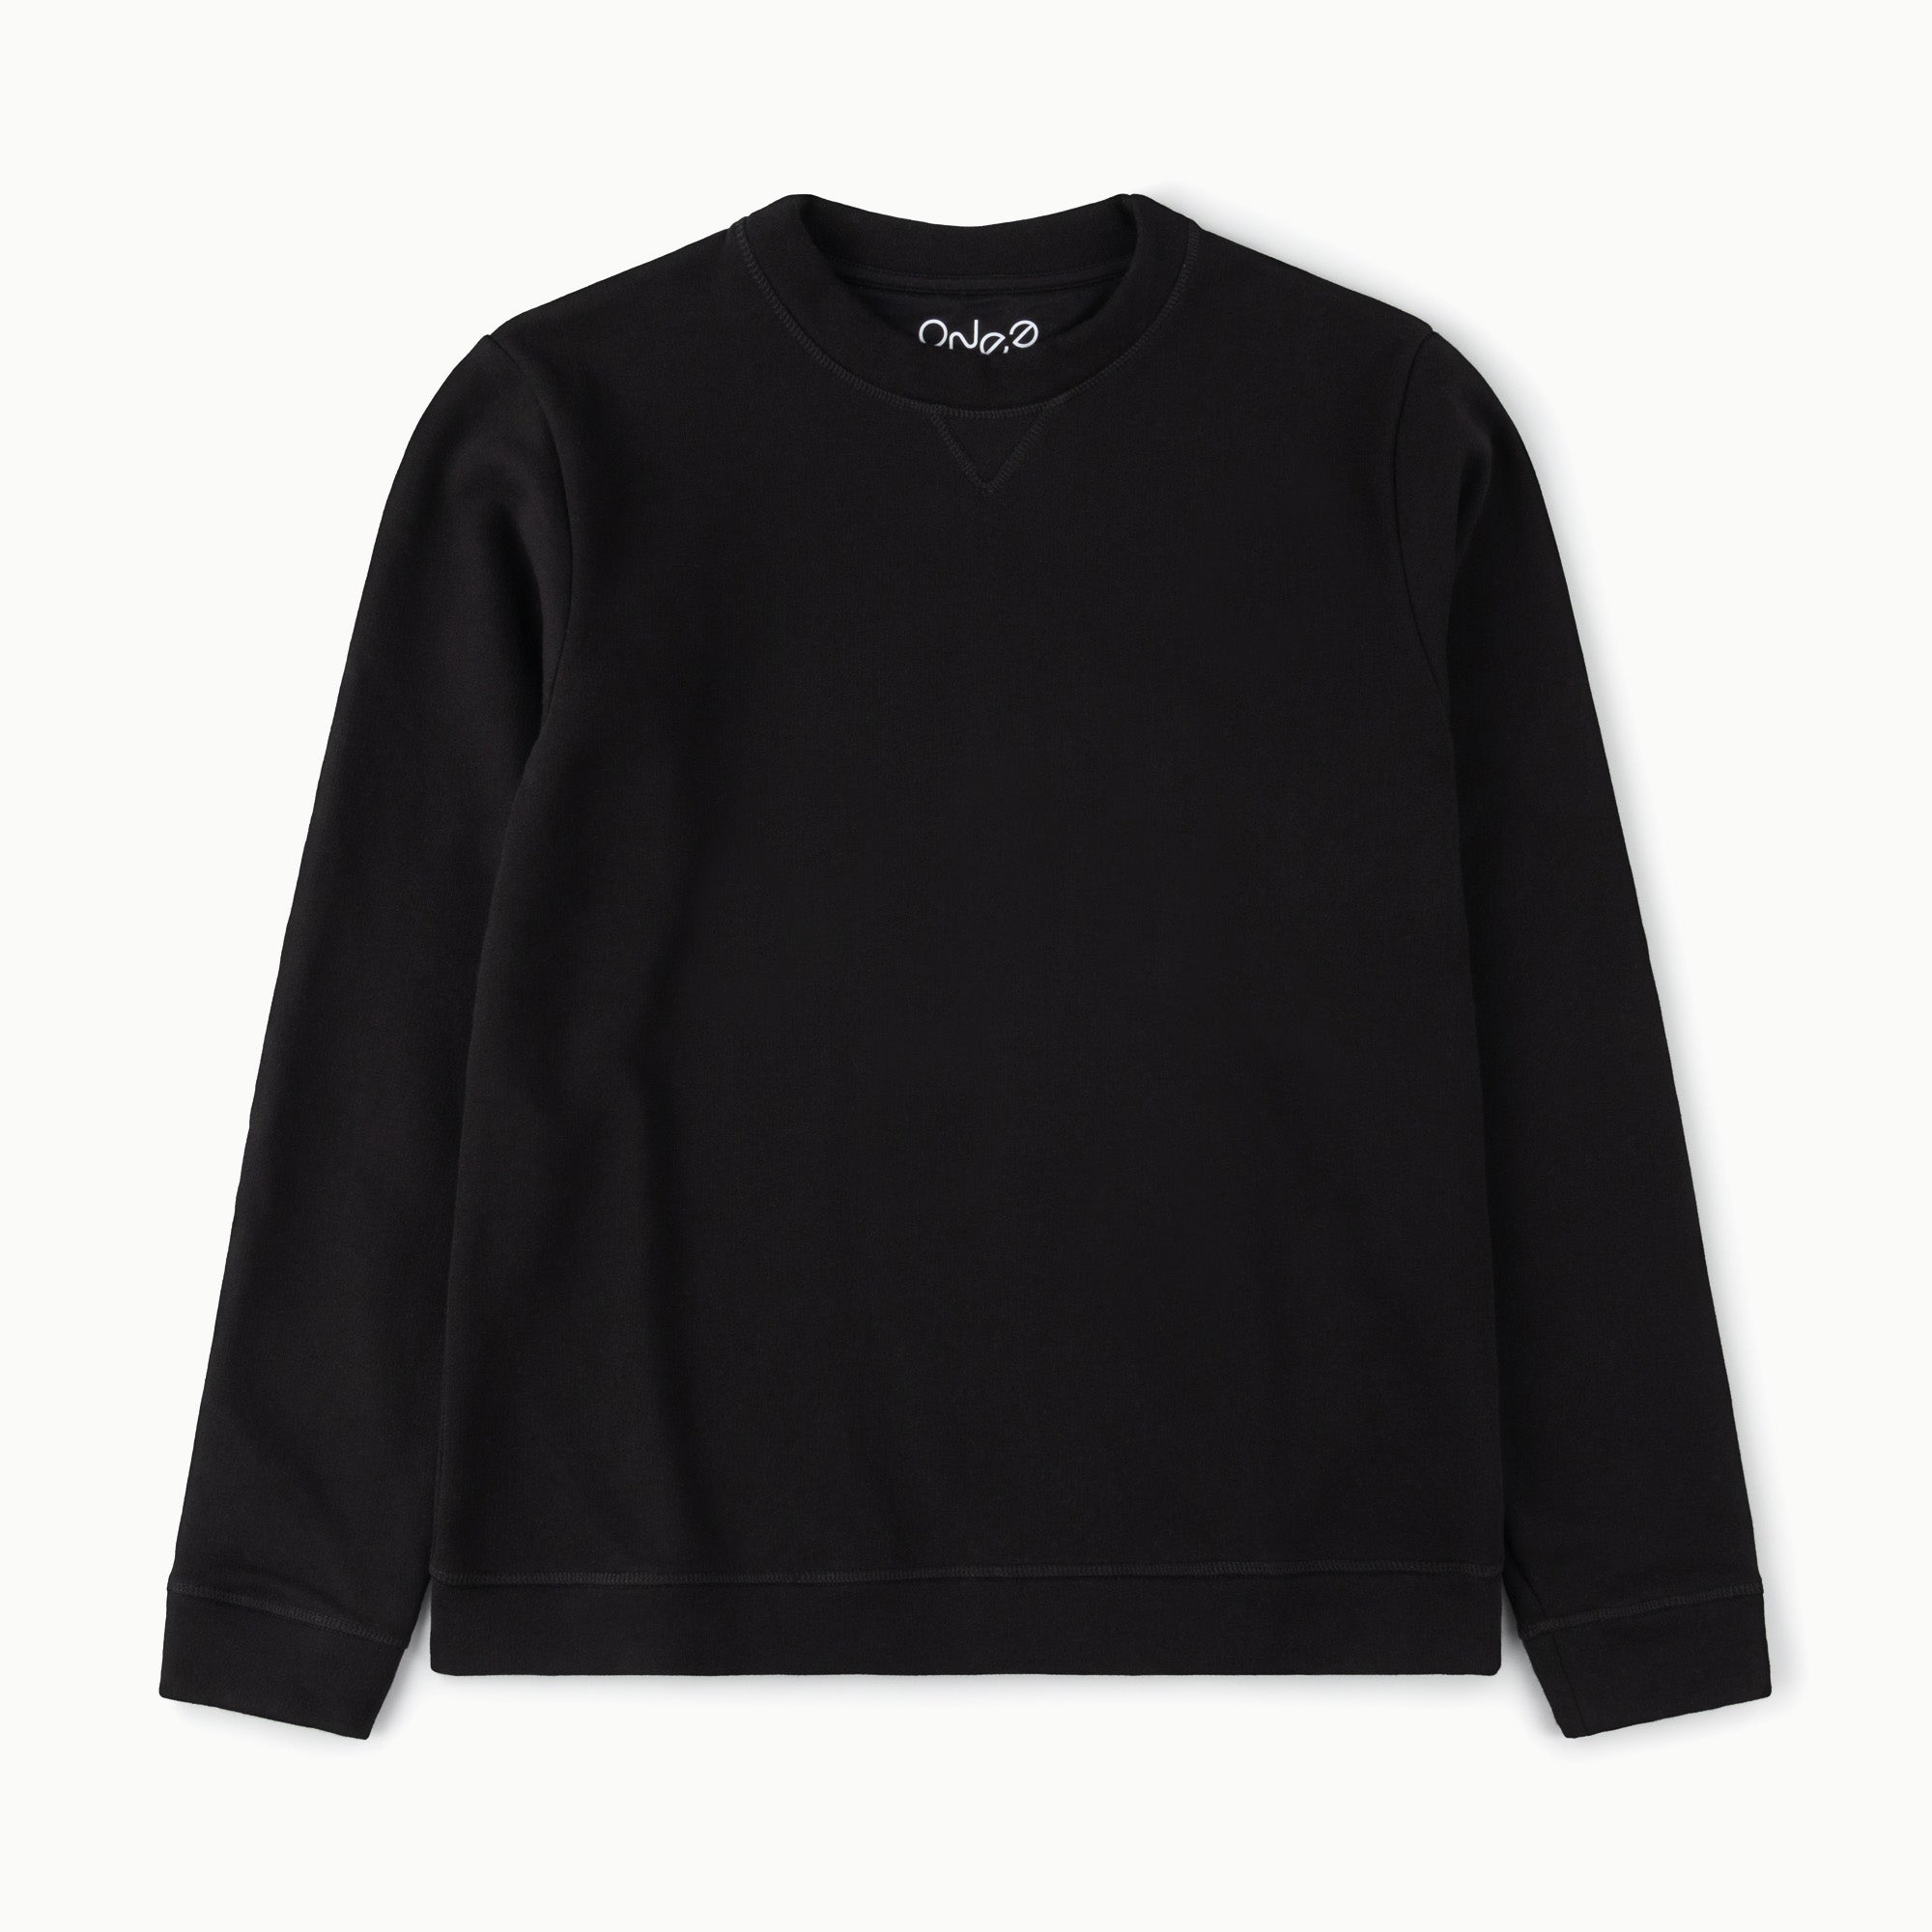 unisex black organic cotton sweatshirt